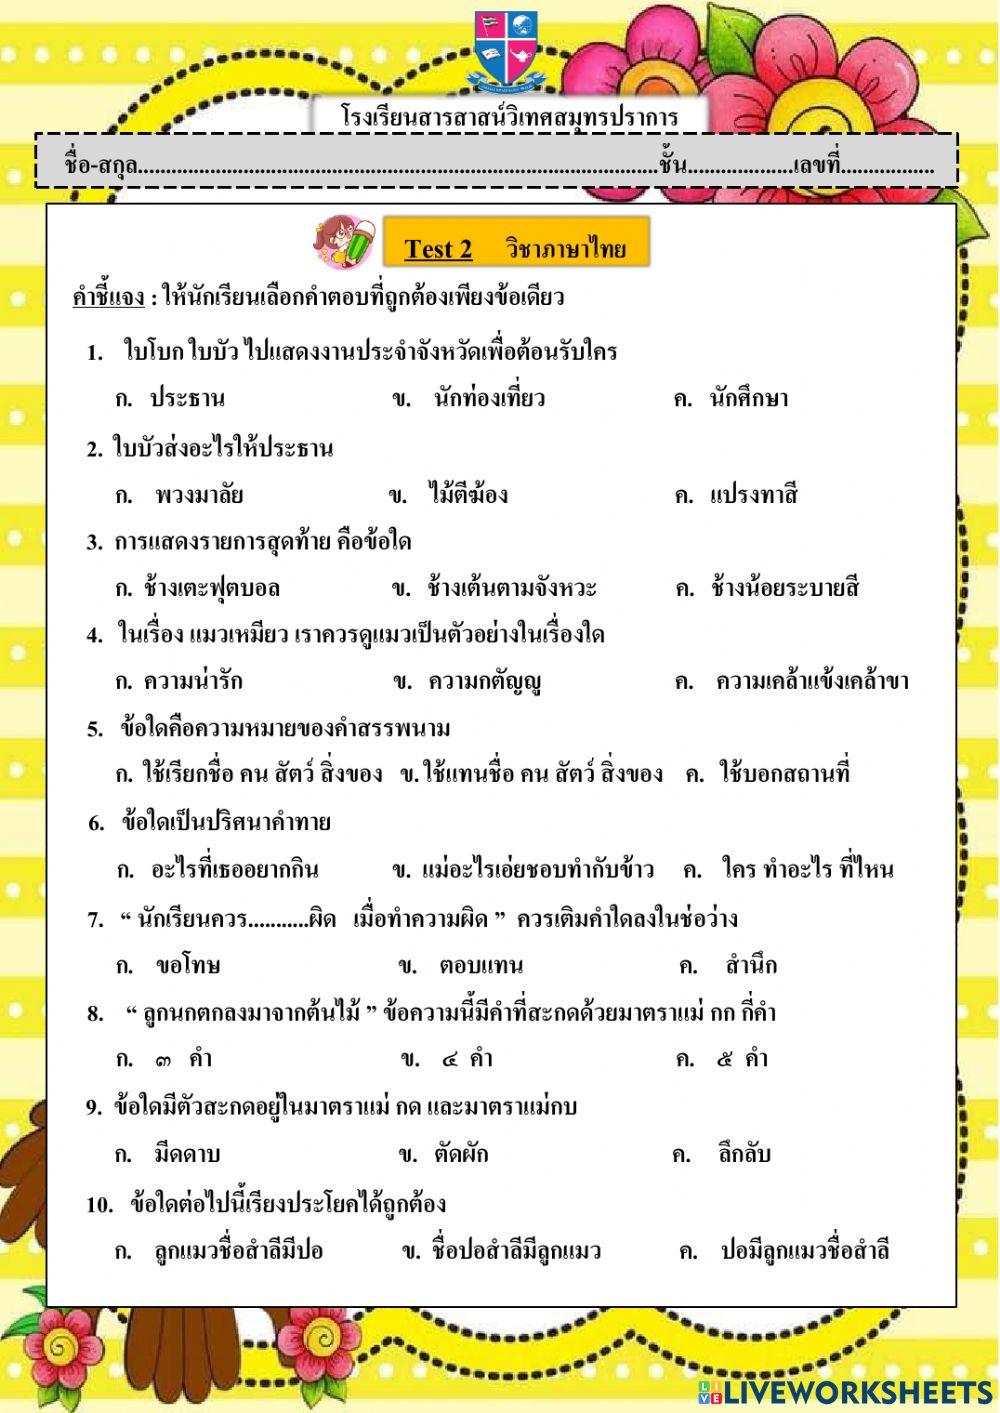 Test 2 ภาษาไทย